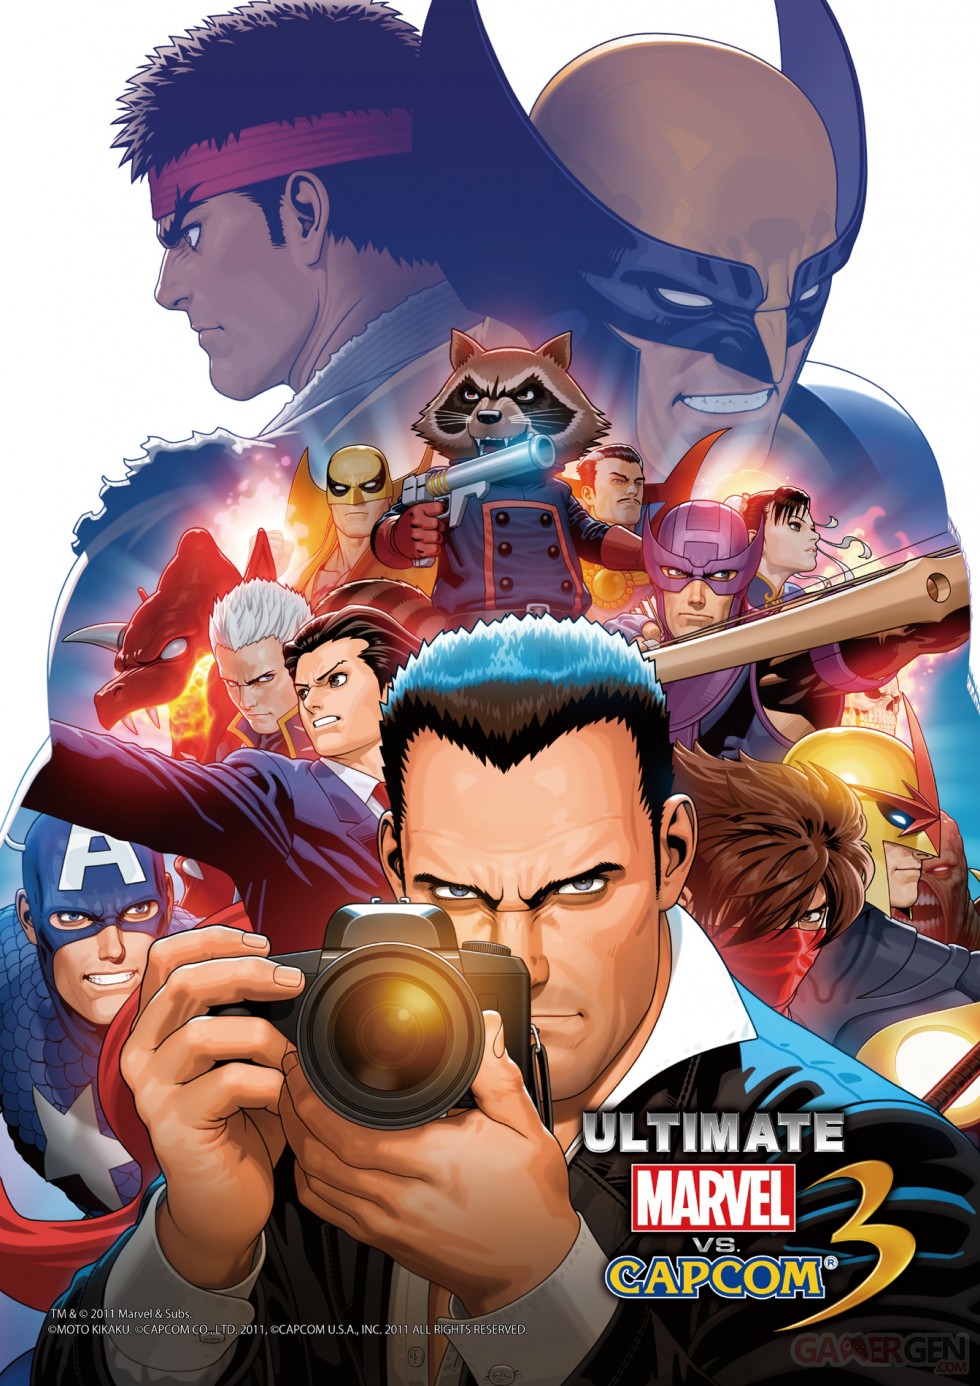 Ultimate-Marvel-vs-Capcom-3_31-10-2011_art-2